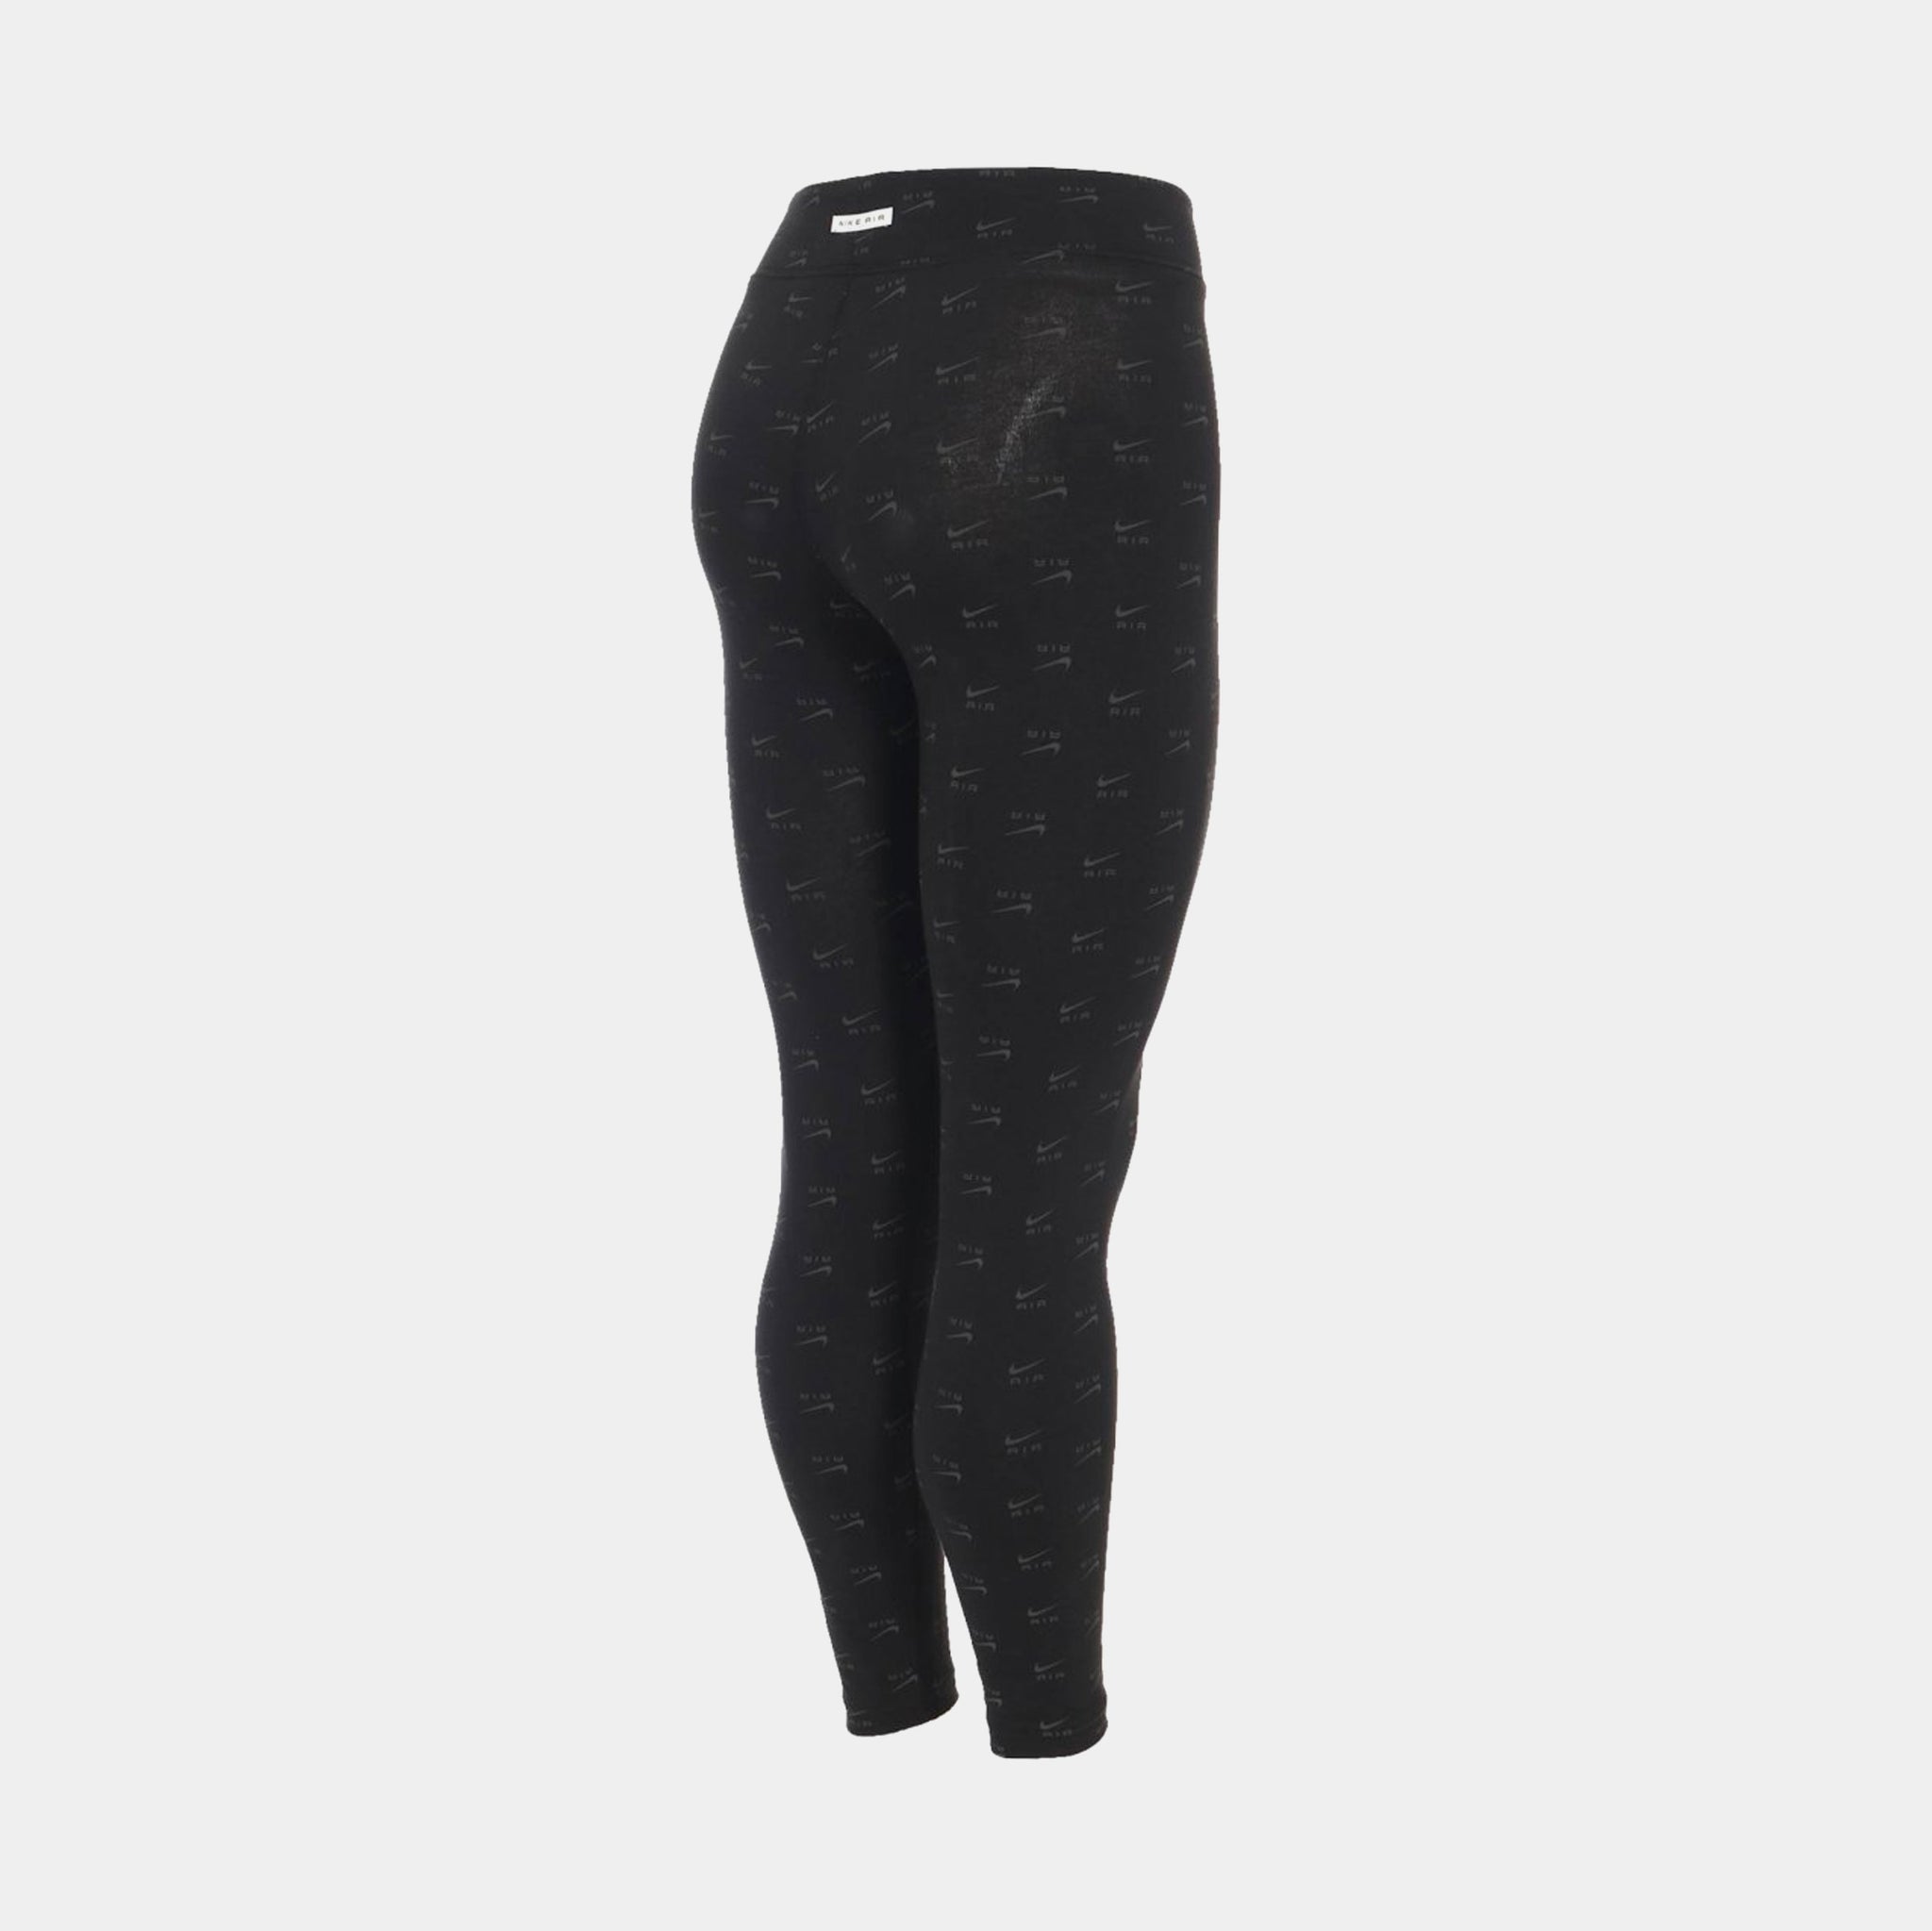 Women's Black Trousers & Tights. Nike AU